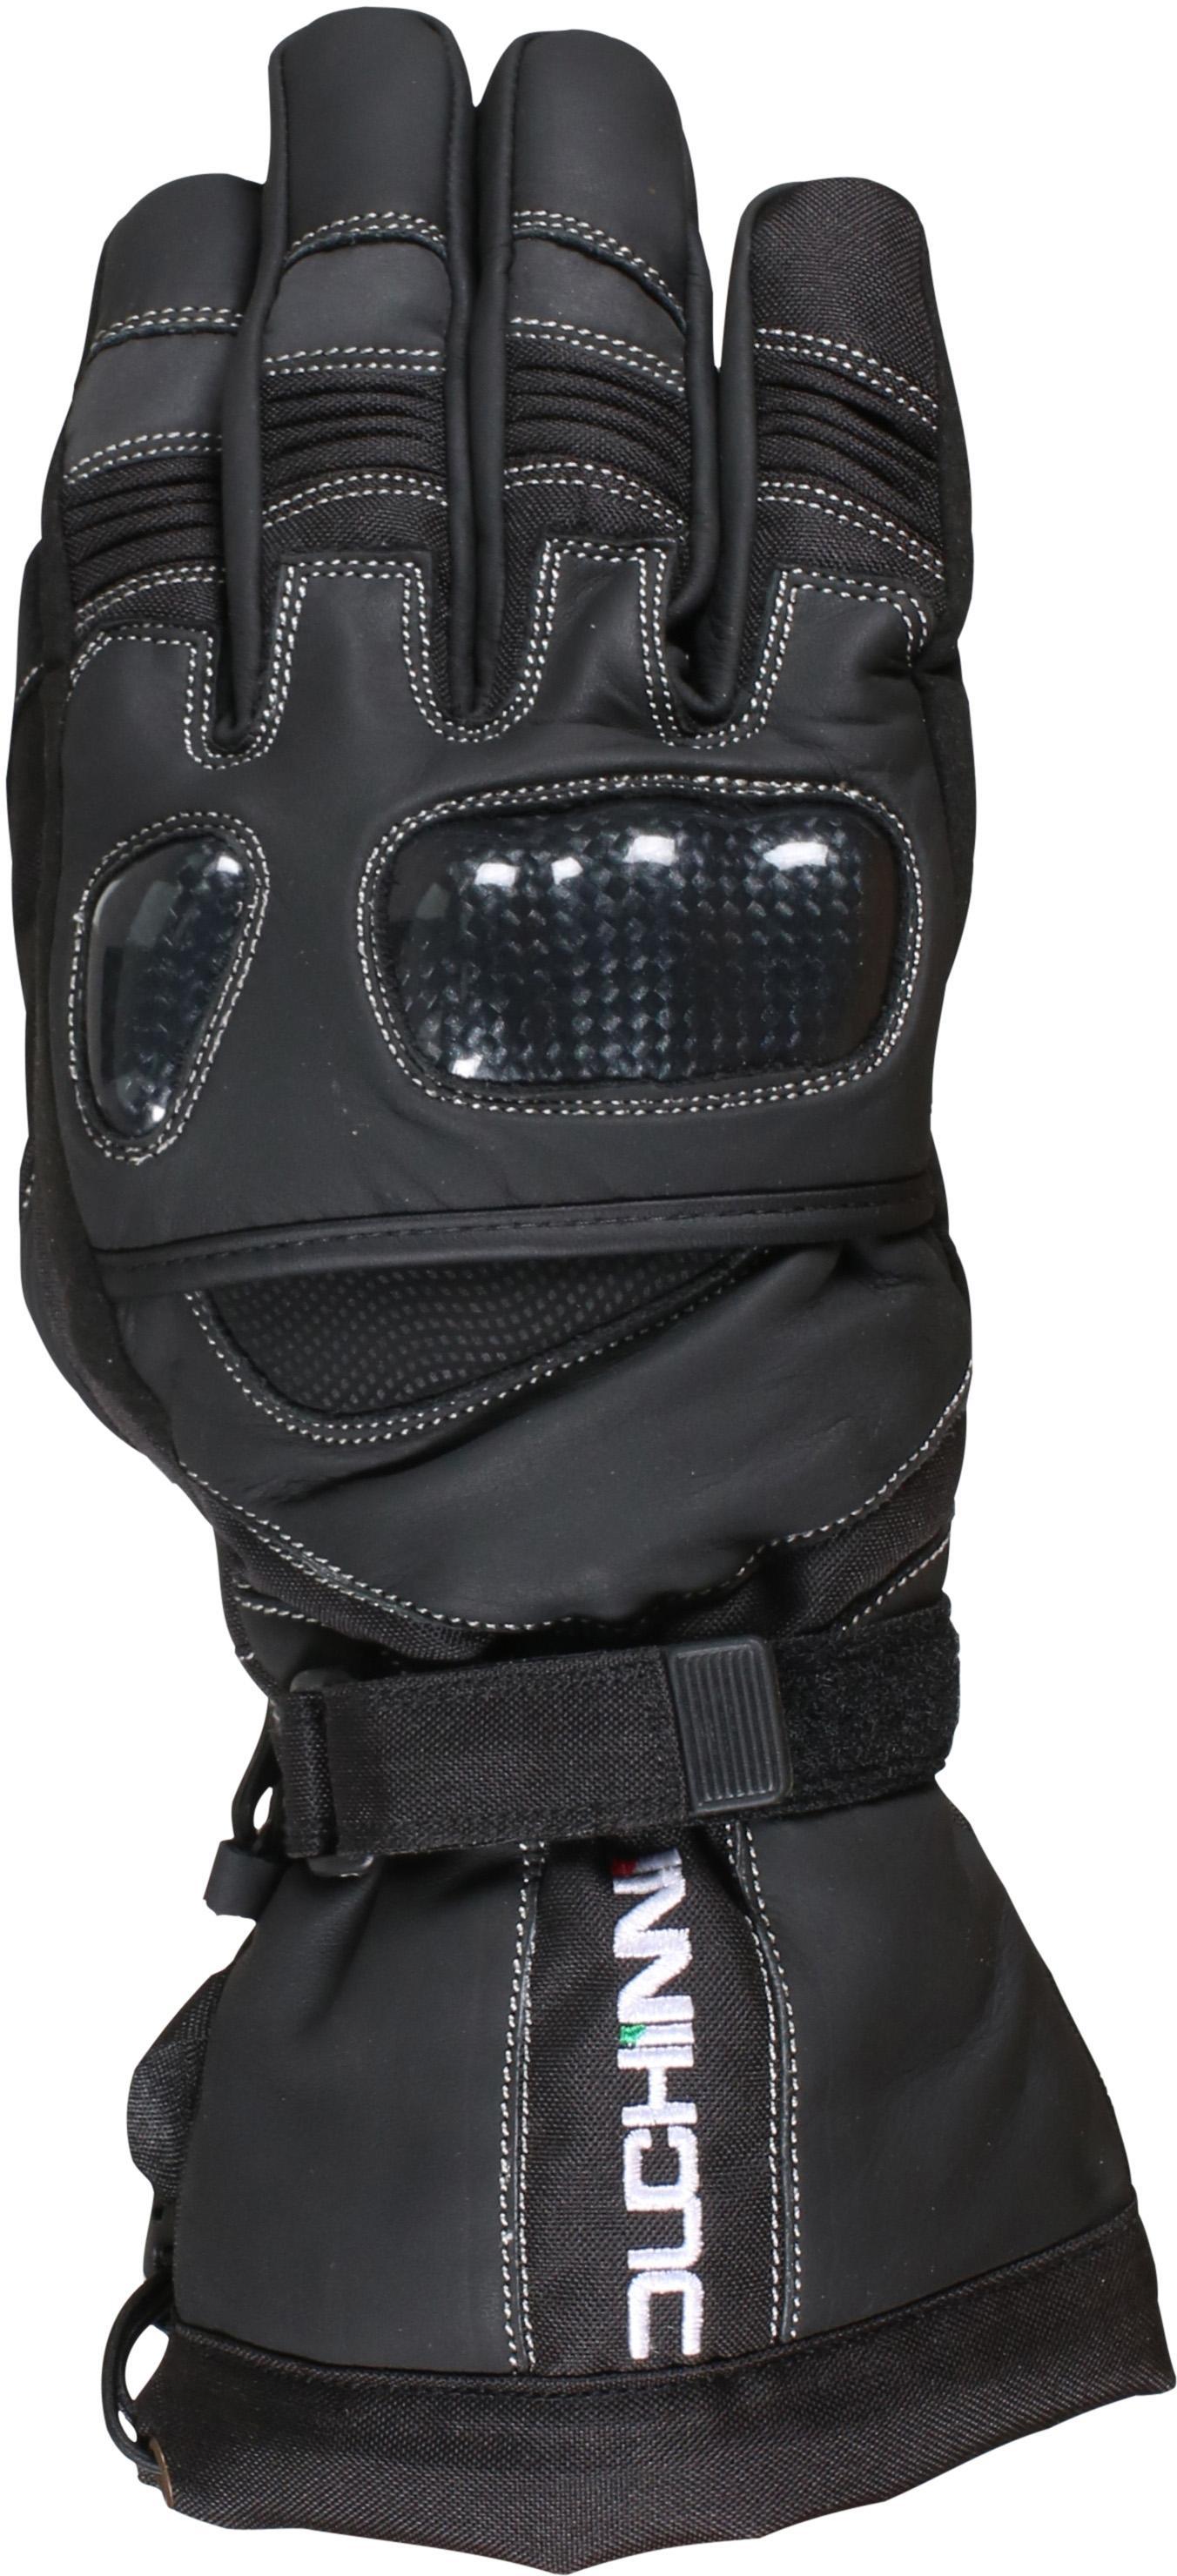 Duchinni Yukon Motorcycle Gloves - Black, M